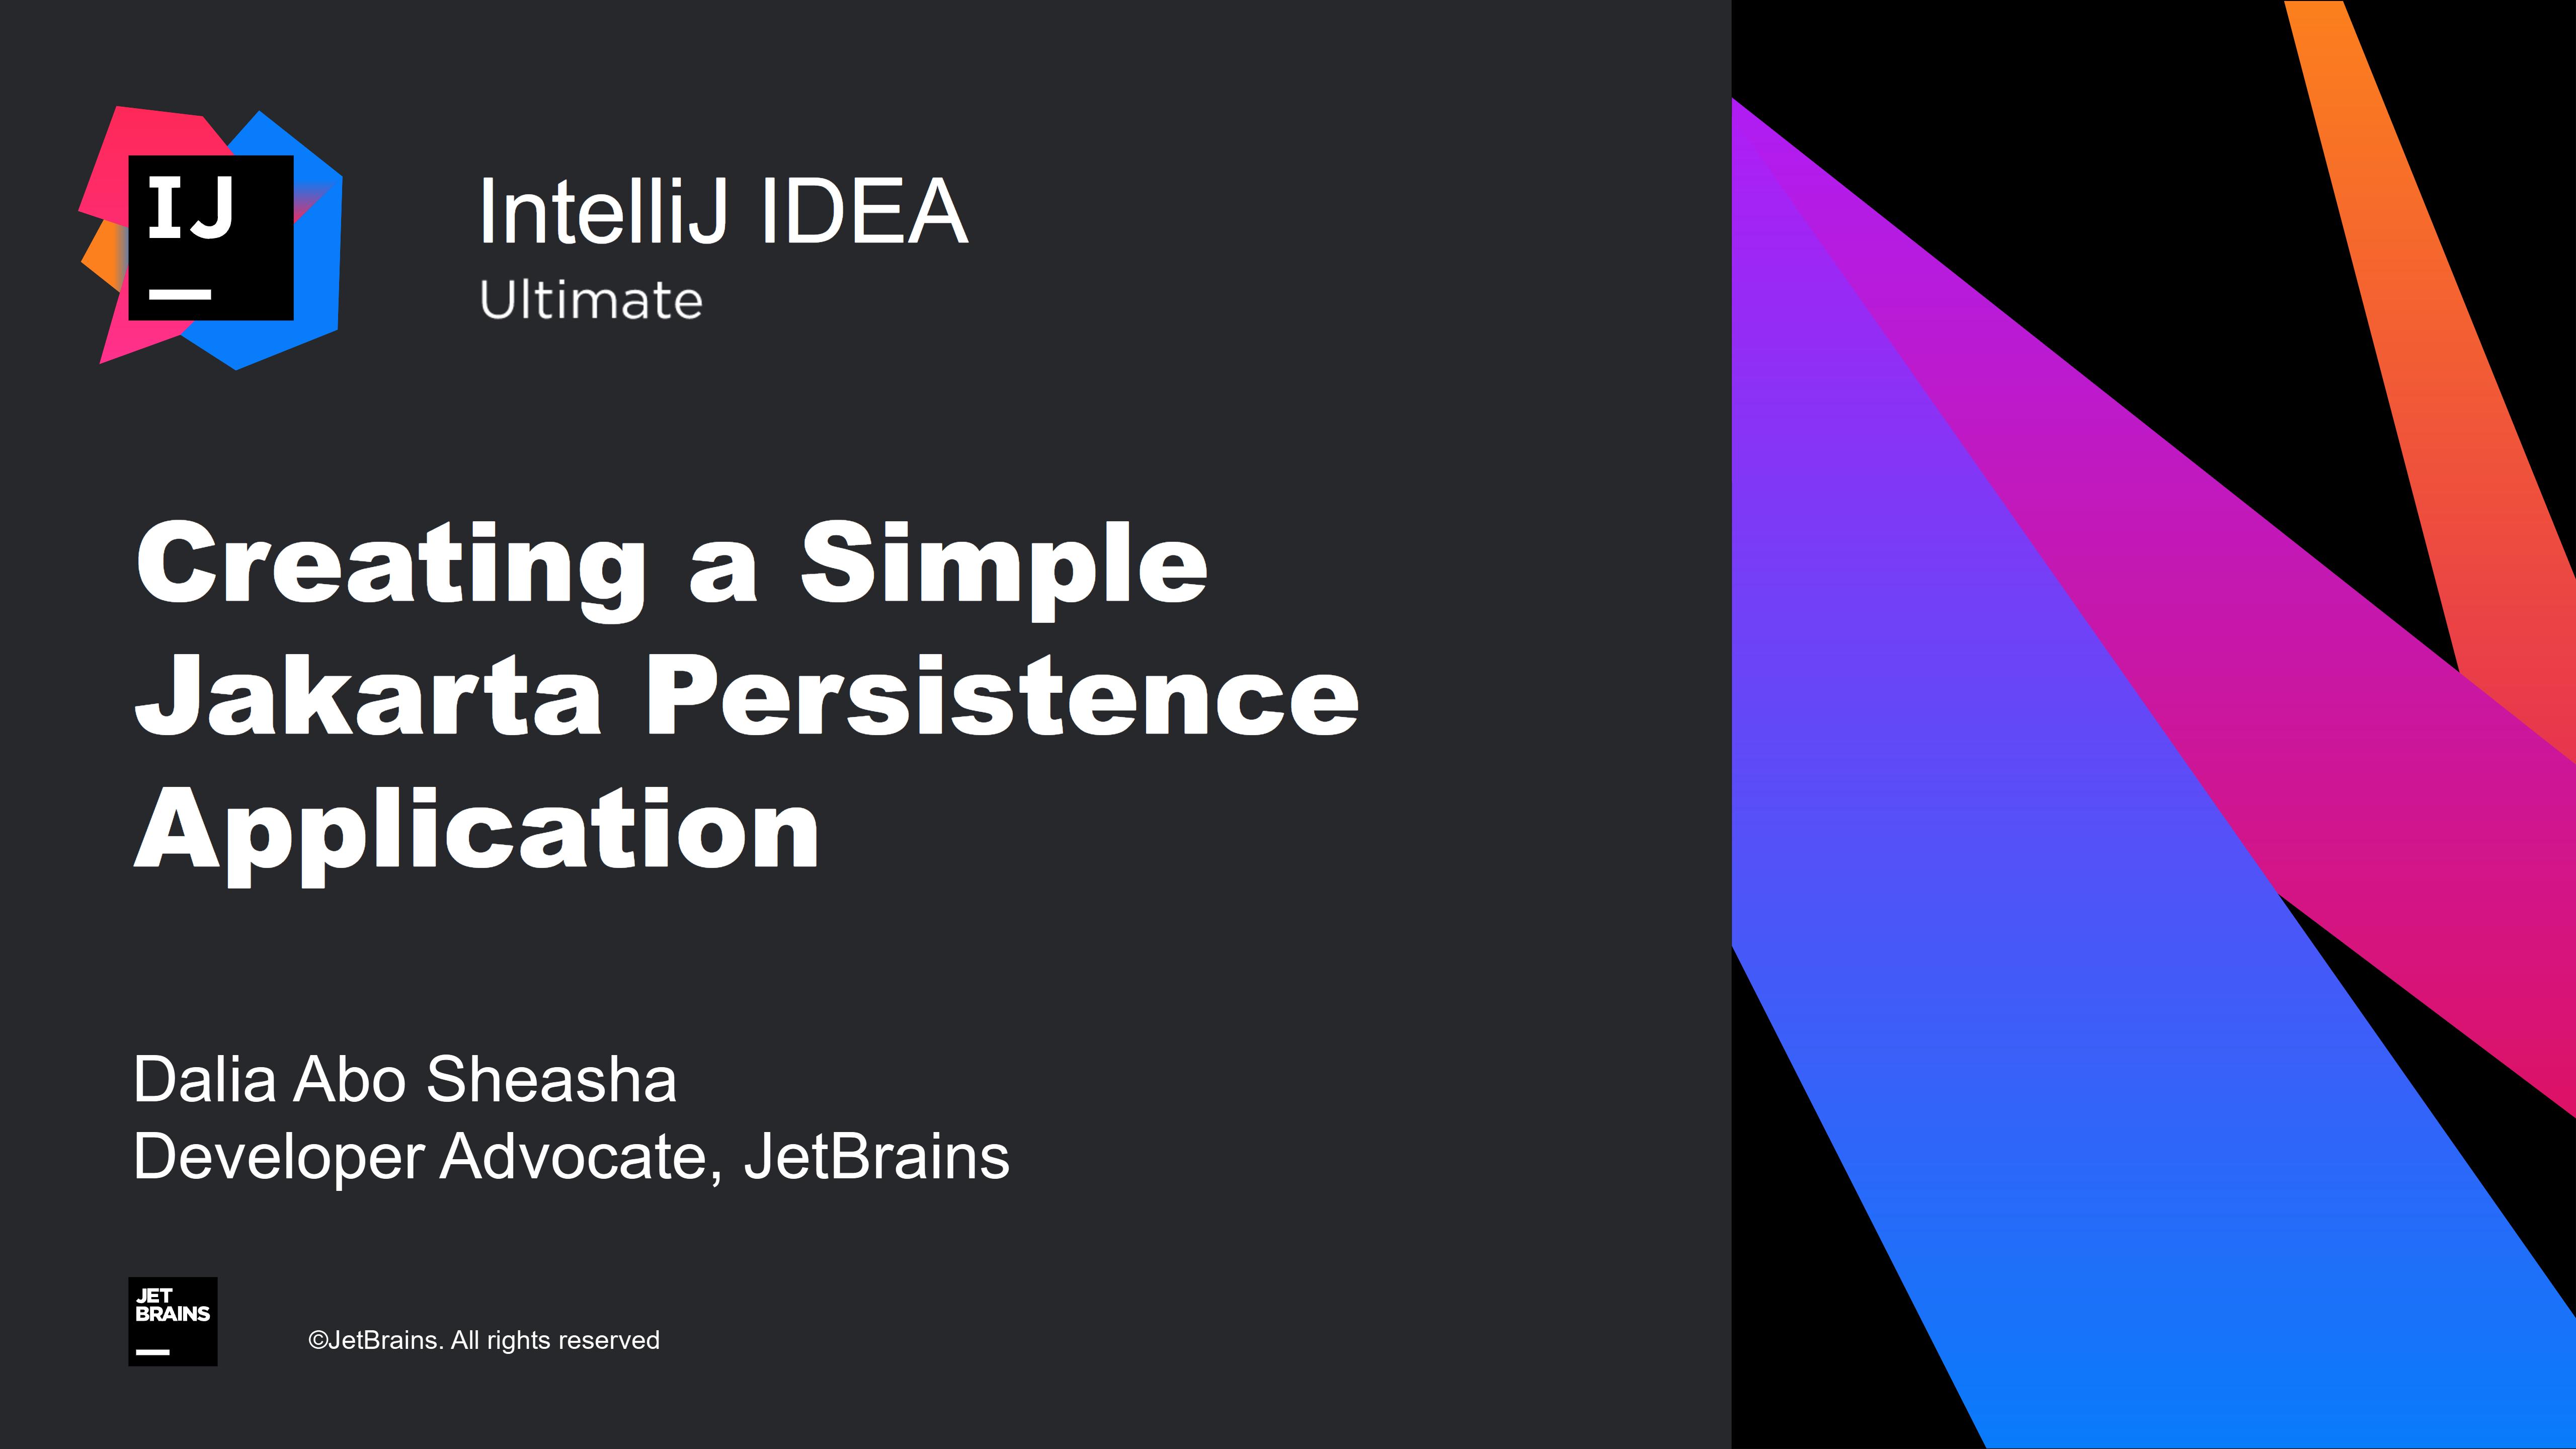 Creating a Simple JPA Application | The IntelliJ IDEA Blog